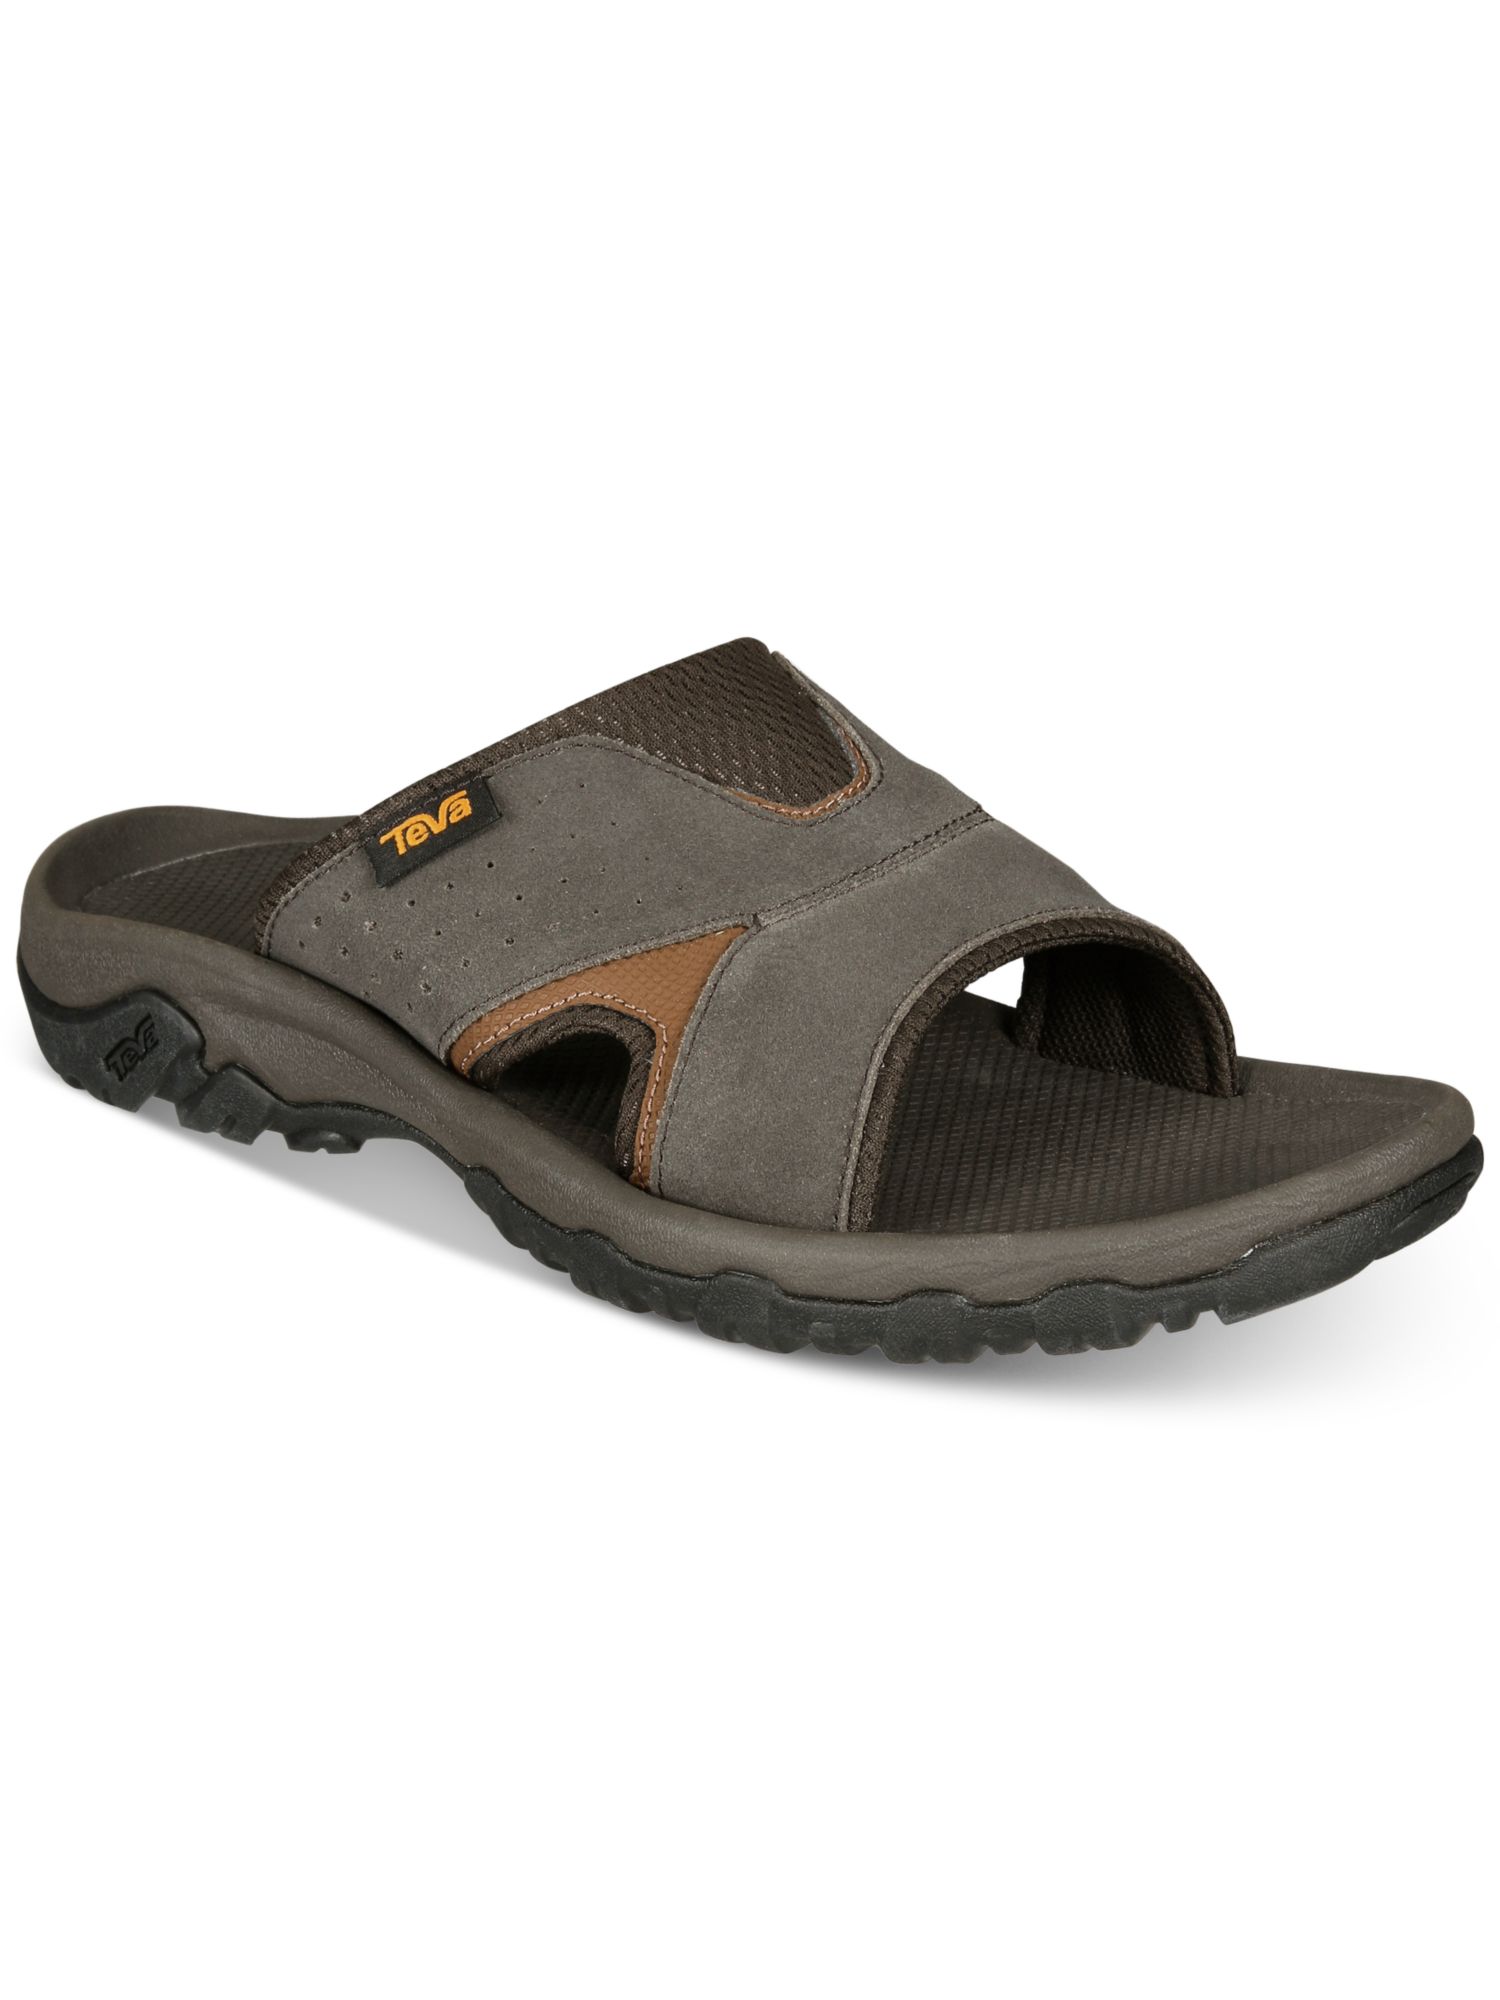 TEVA Mens Gray Color Block Mixed Media Traction Padded Water Resistant Katavi 2 Open Toe Slip On Slide Sandals Shoes 9